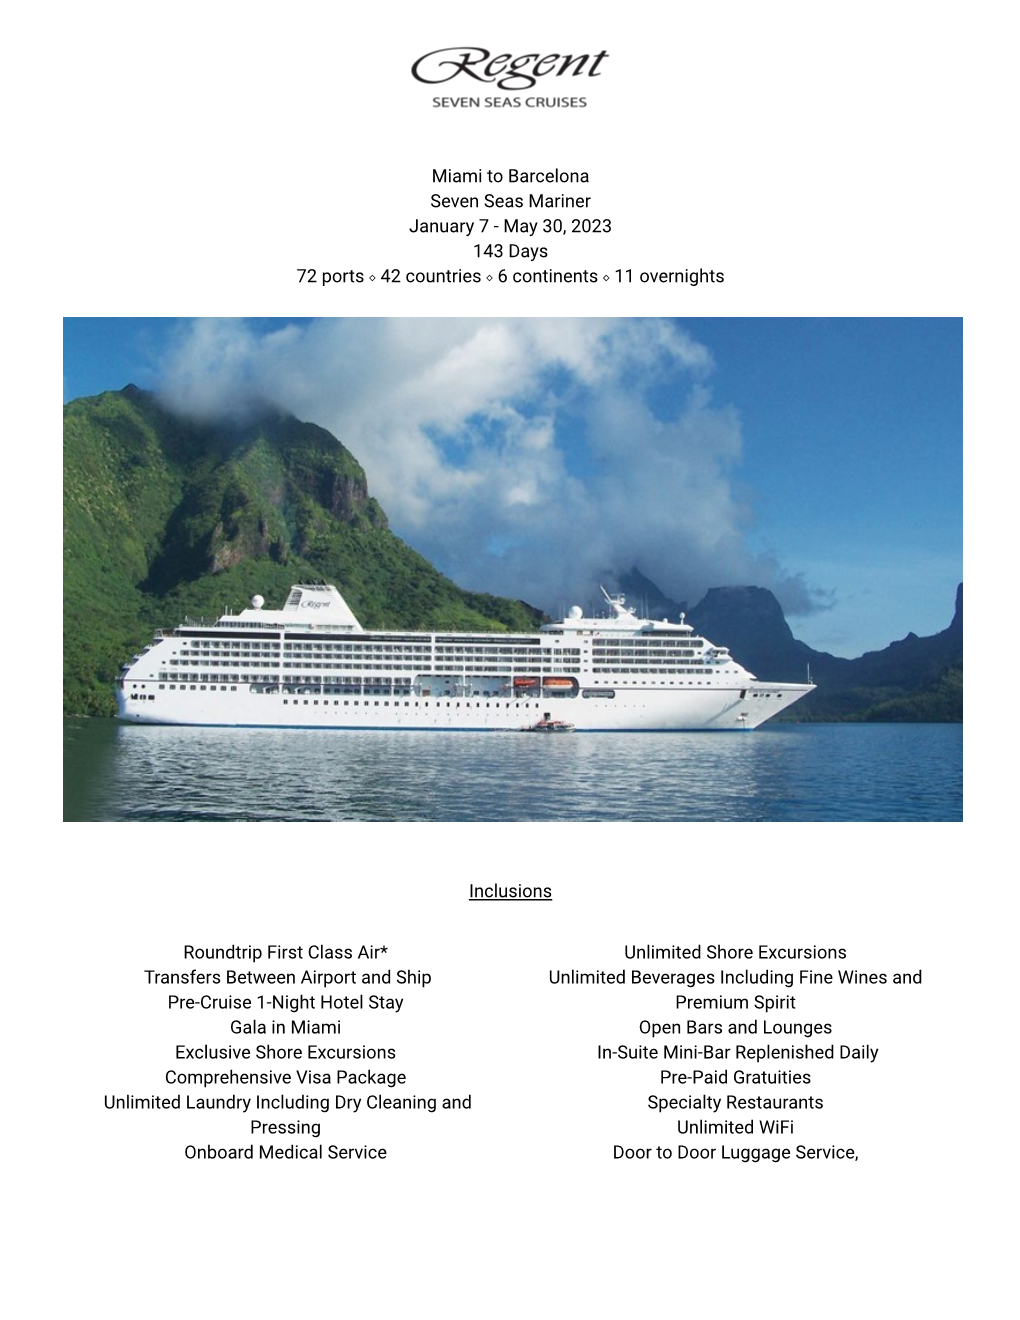 Regent World Cruise 2023